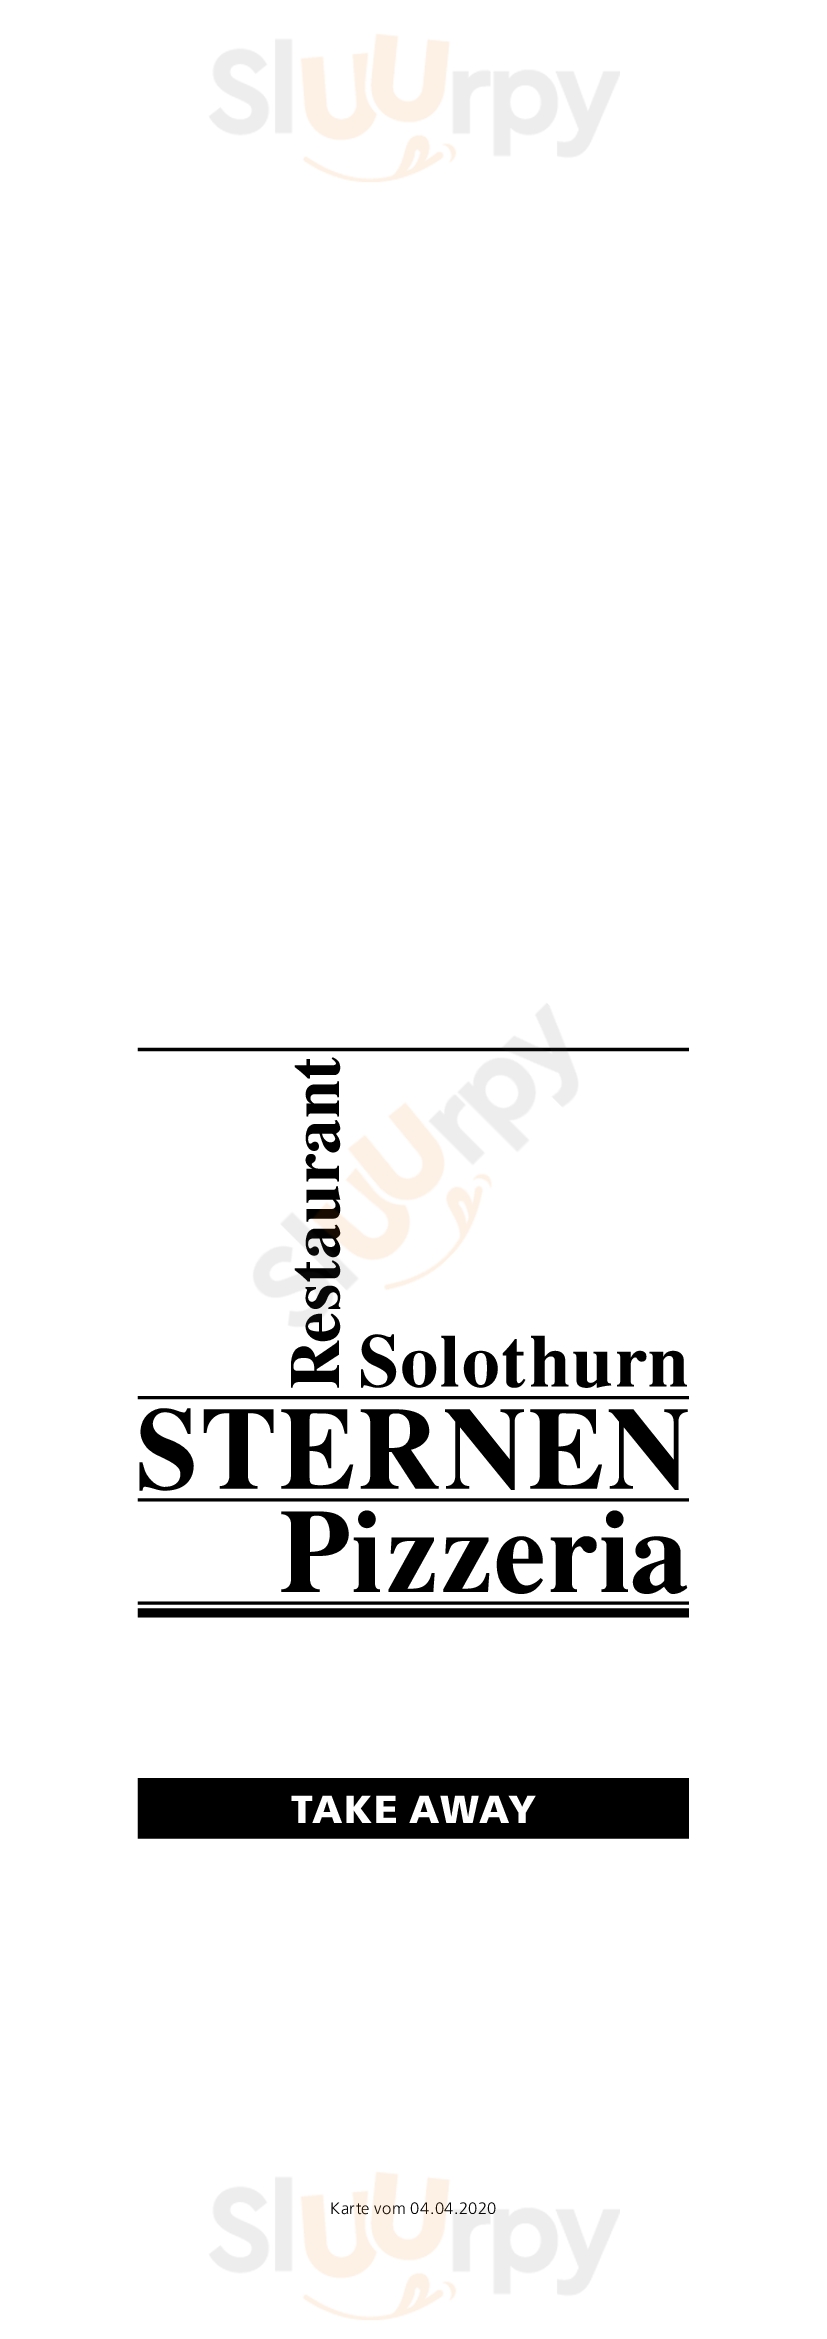 Restaurant Pizzeria Sternen Solothurn Menu - 1